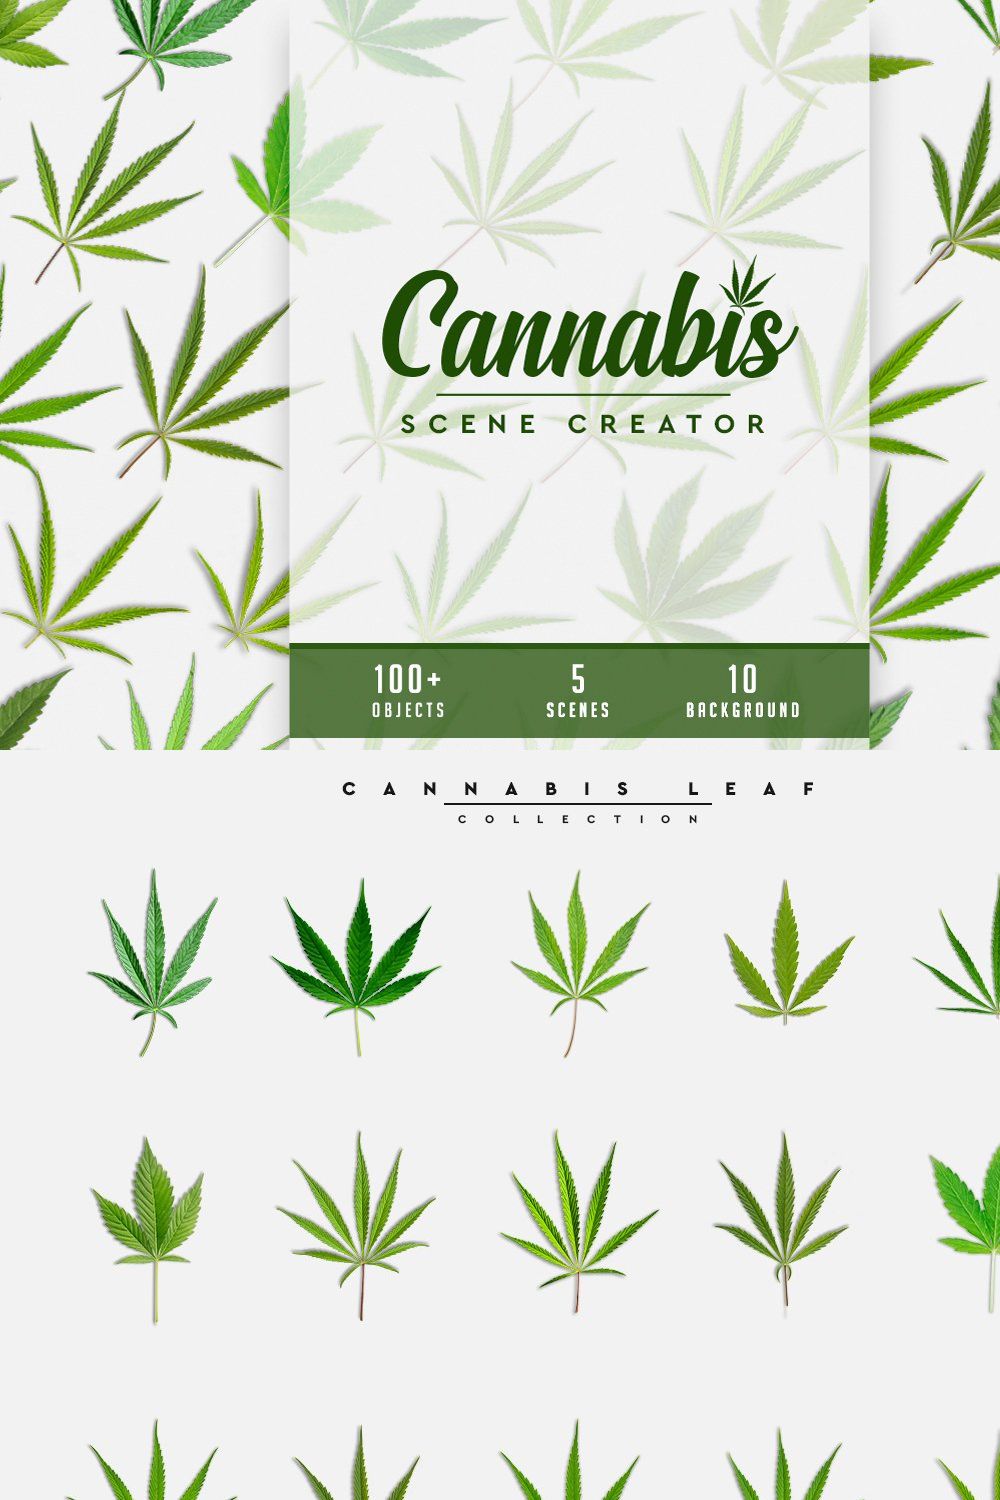 Cannabis Scene Creator #01 pinterest preview image.